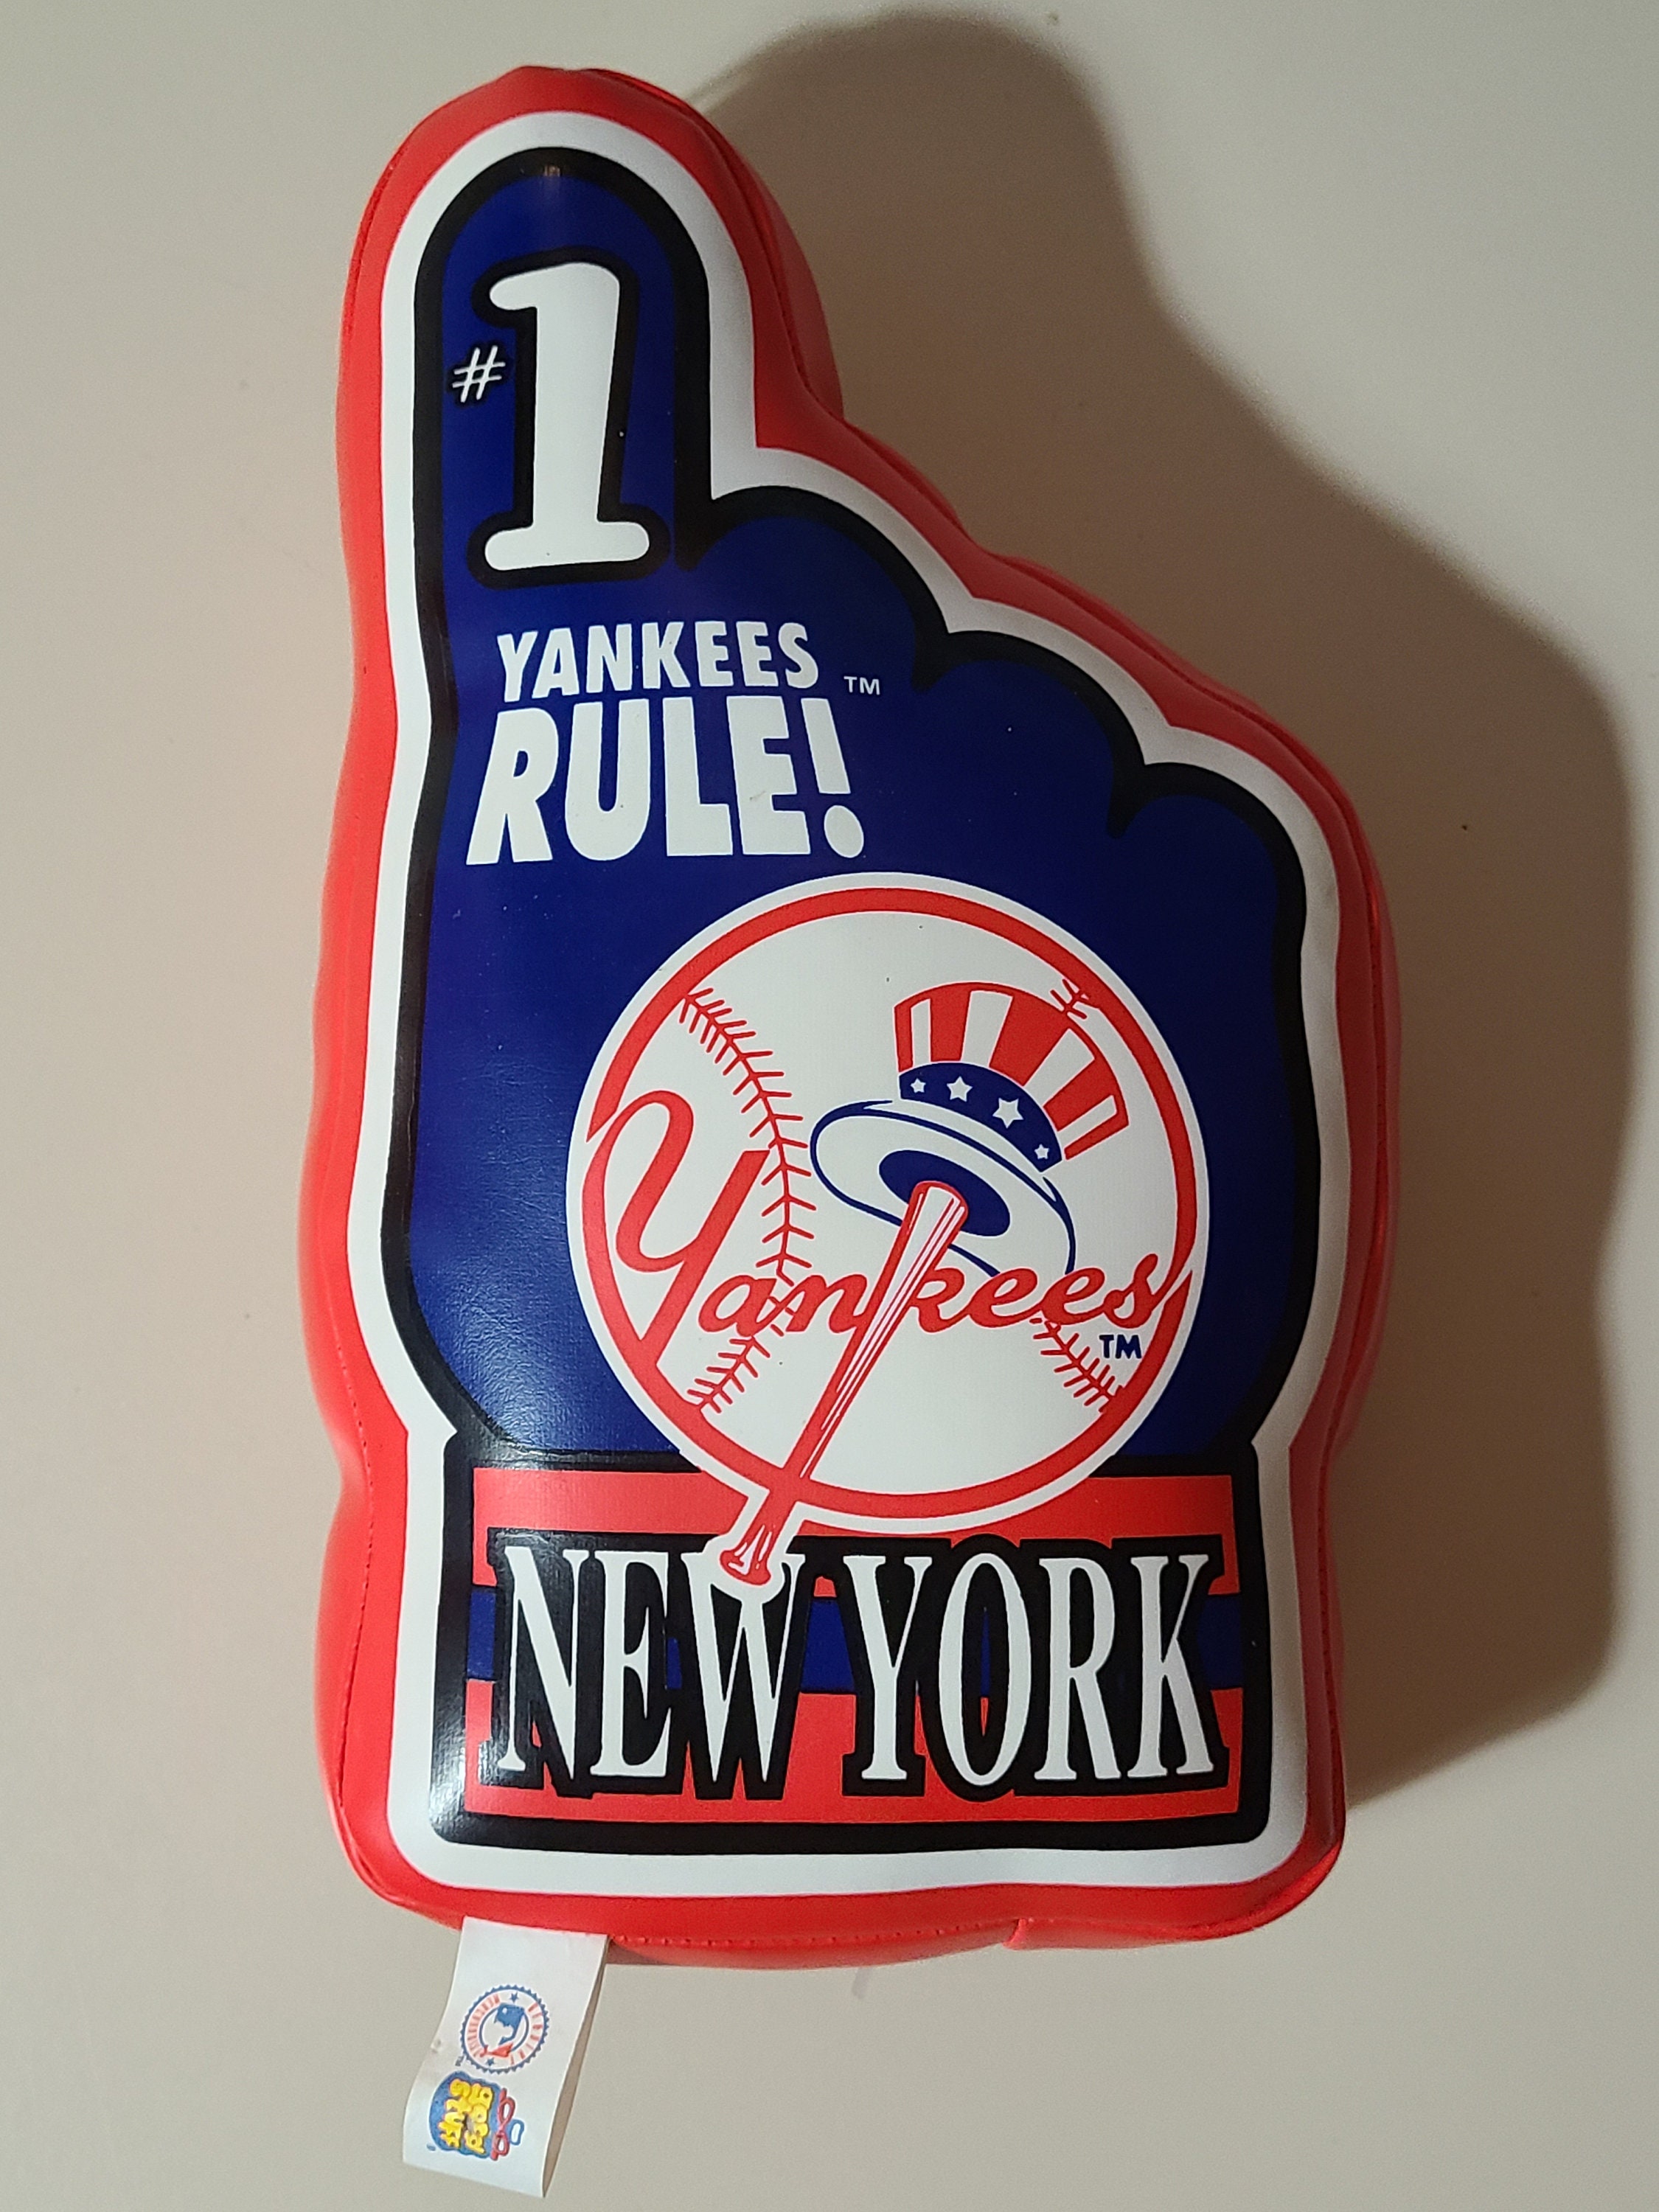 Personalized New York Yankees Plush Baseball – Designs by Chad & Jake